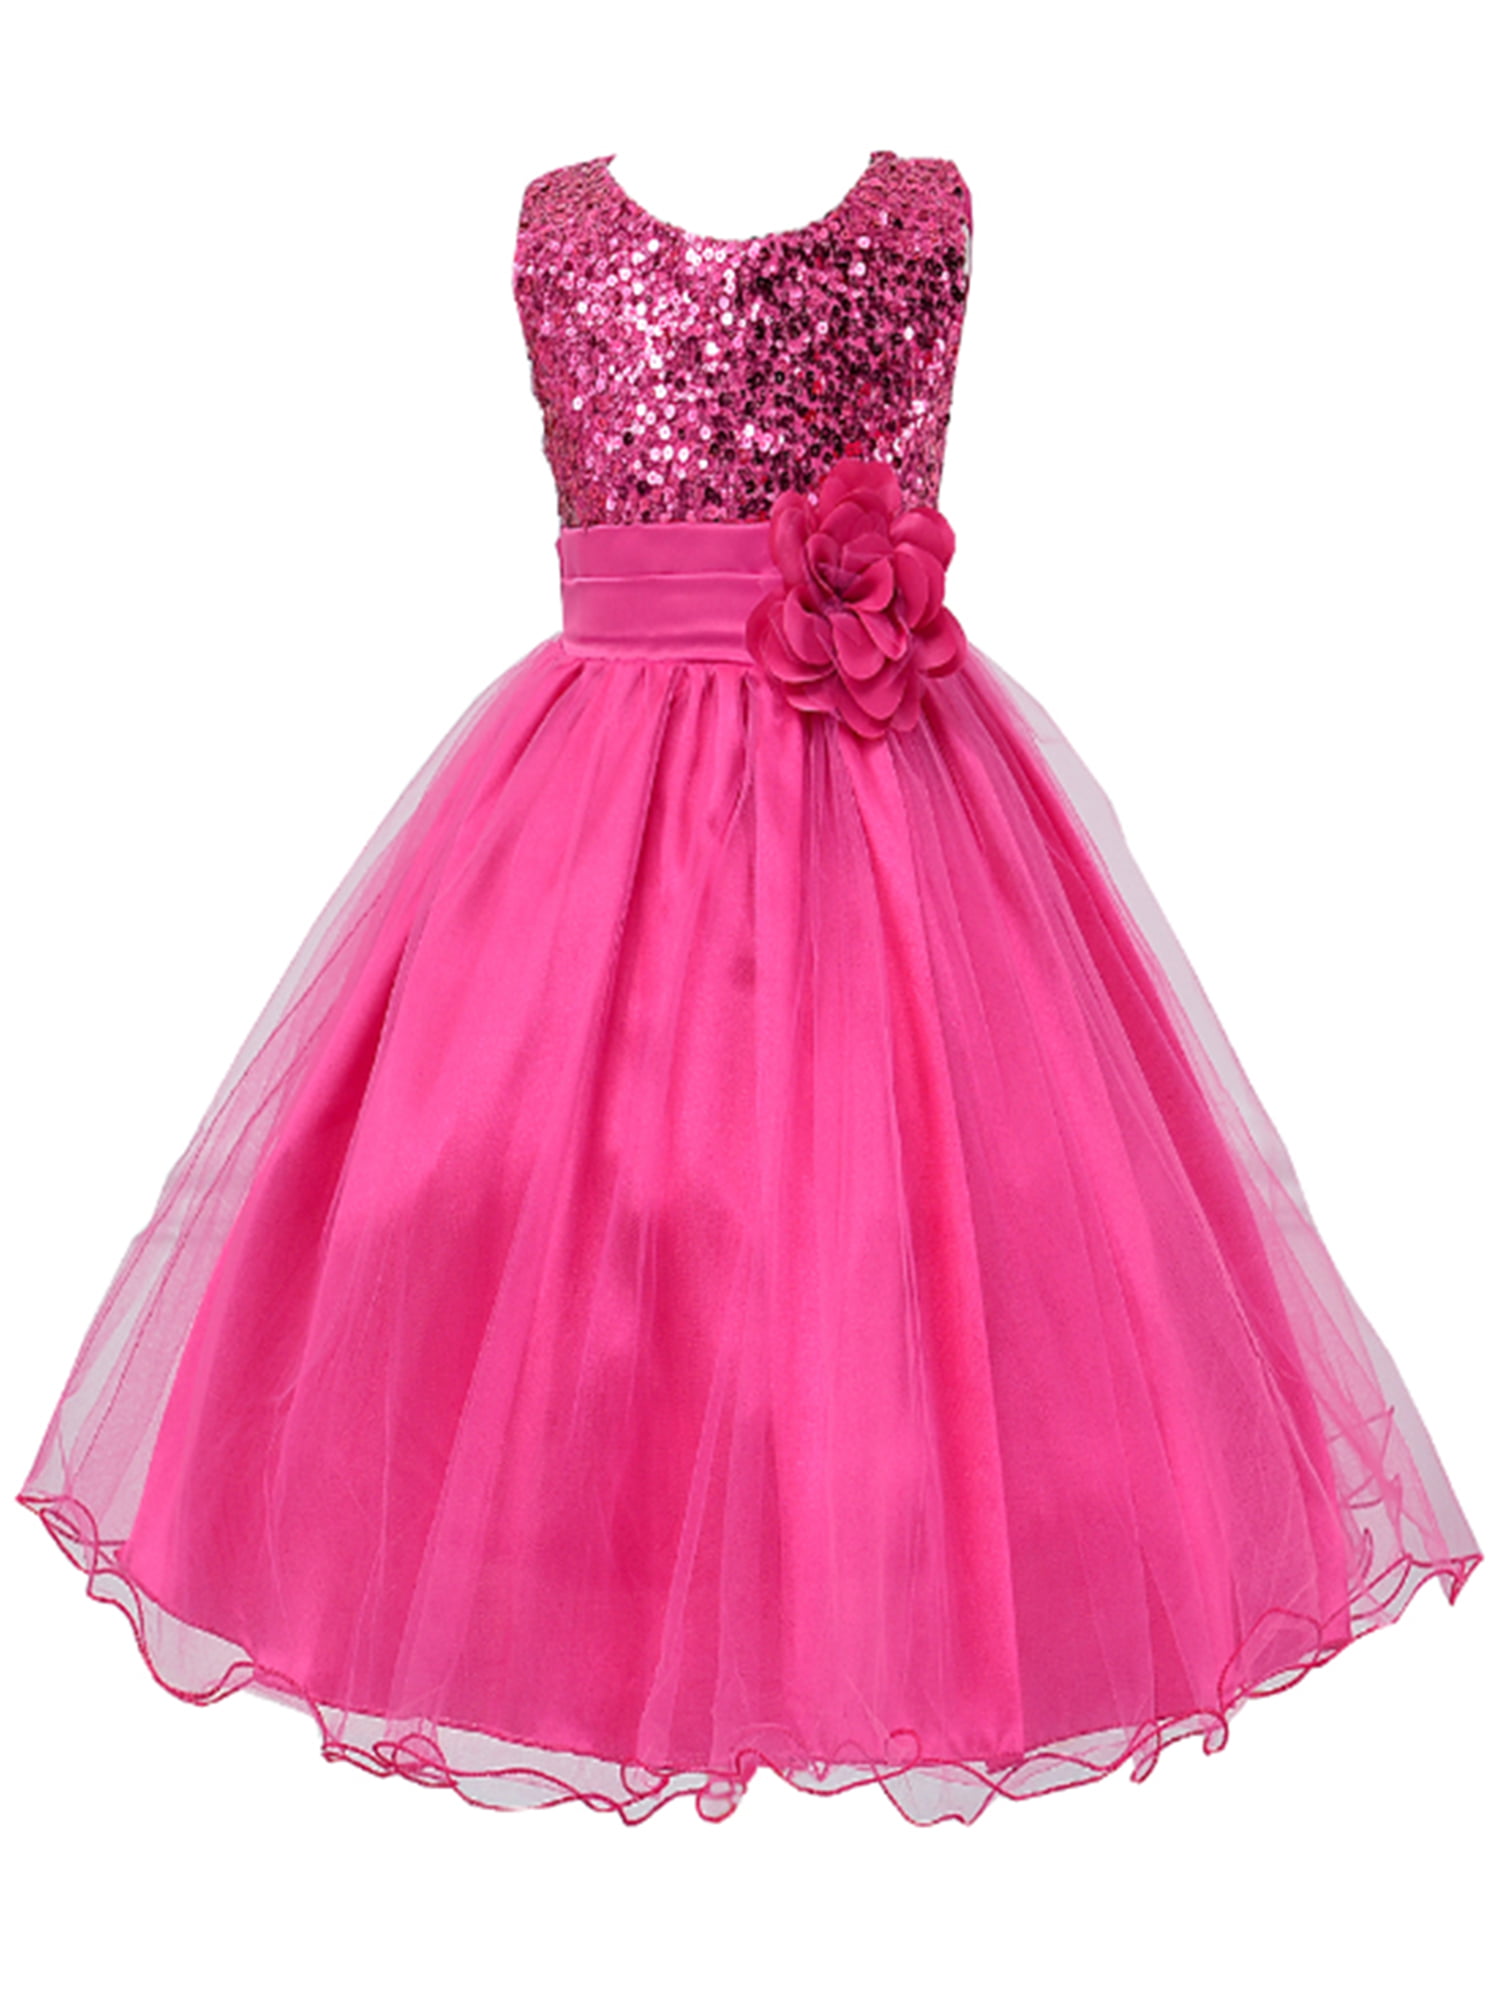 StylesILove Lovely Sequin Flower Girl Dress, 5 Colors (3-4 Years, Rose ...